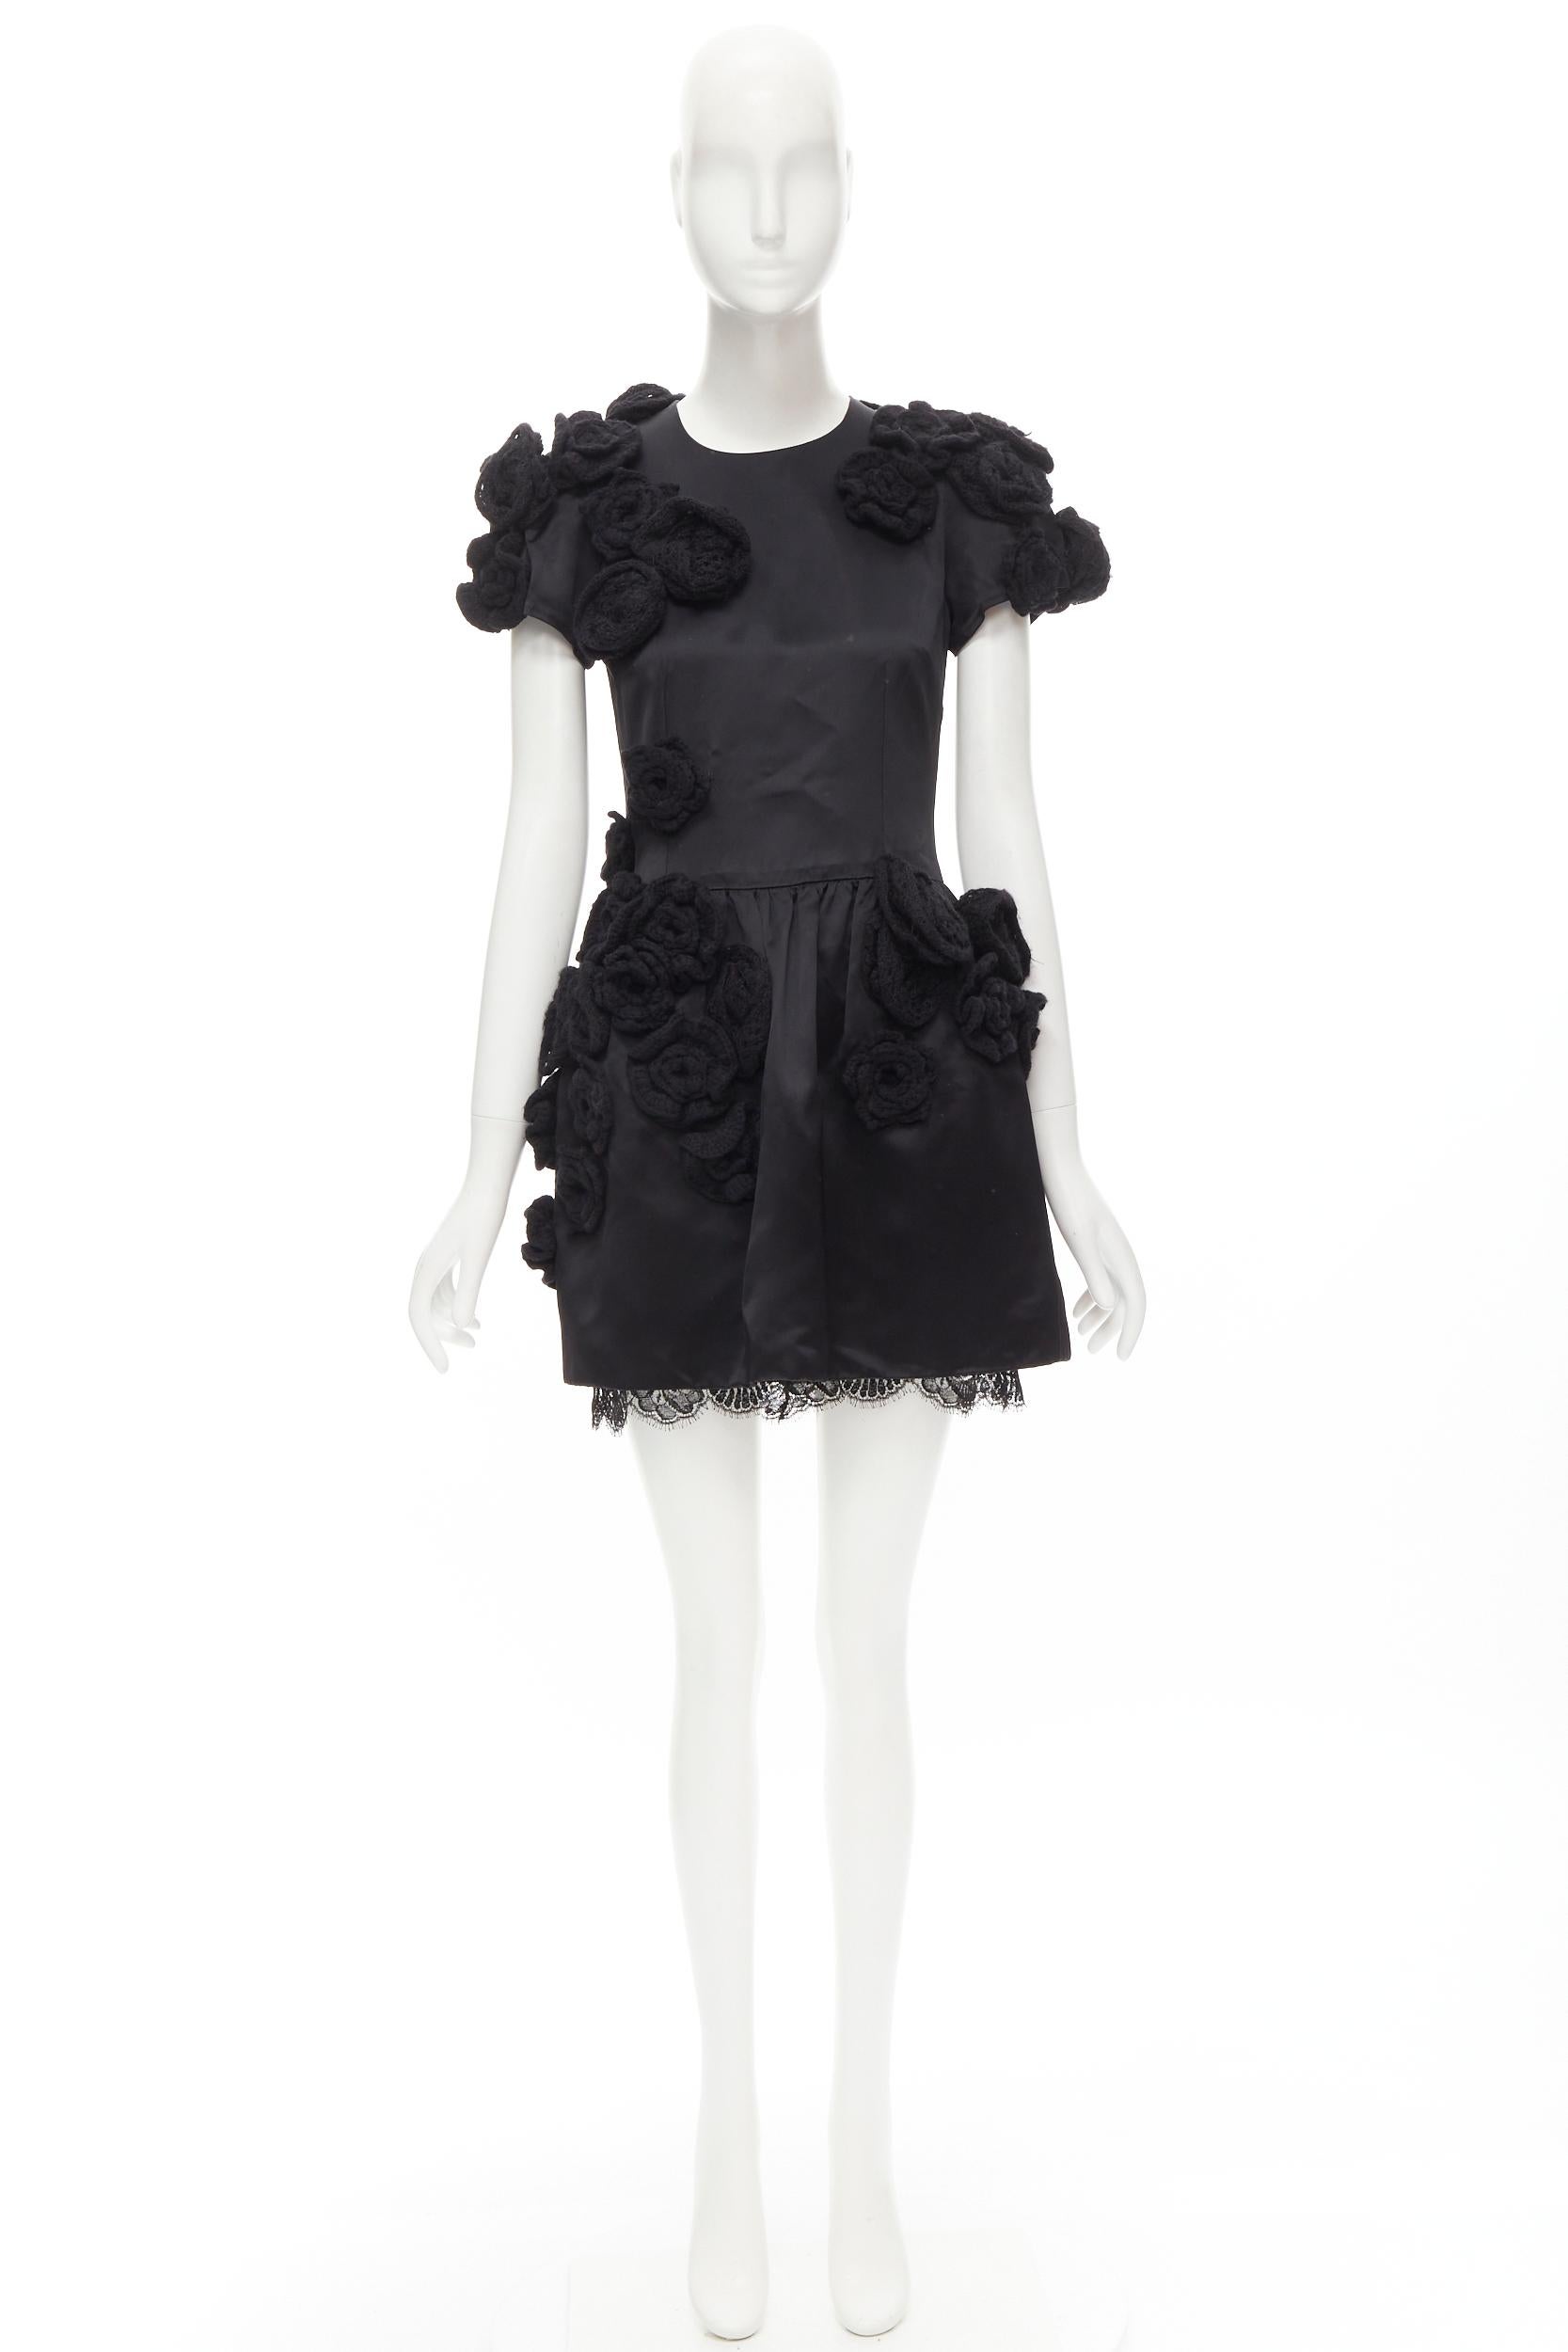 DOLCE GABBANA black 3D wool flower applique lace trimmed dress IT38 XS For Sale 4